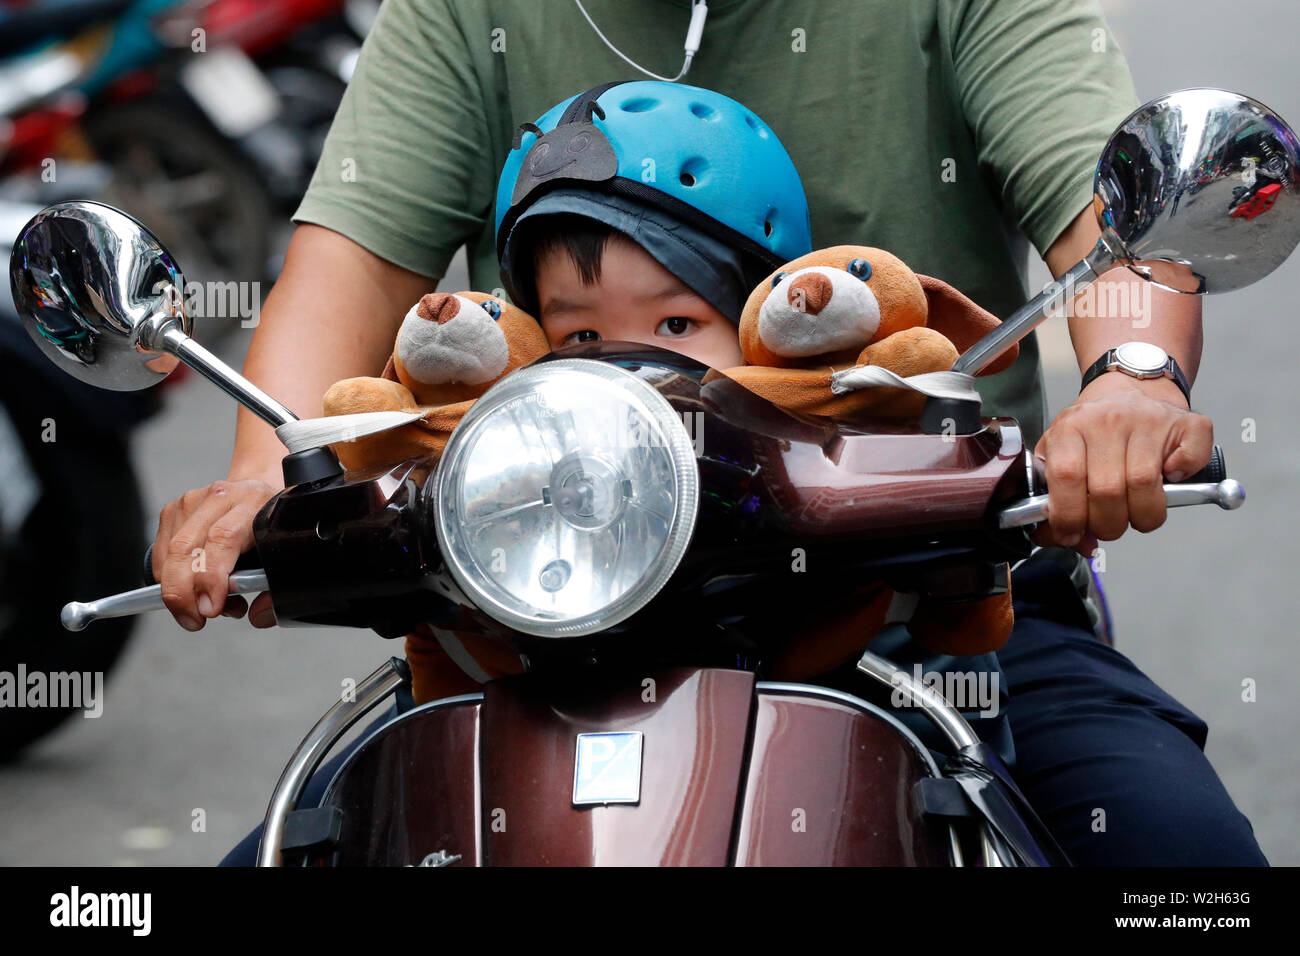 Vietnamese family on a scooter. Road traffic. Ho Chi Minh city. Vietnam. Stock Photo